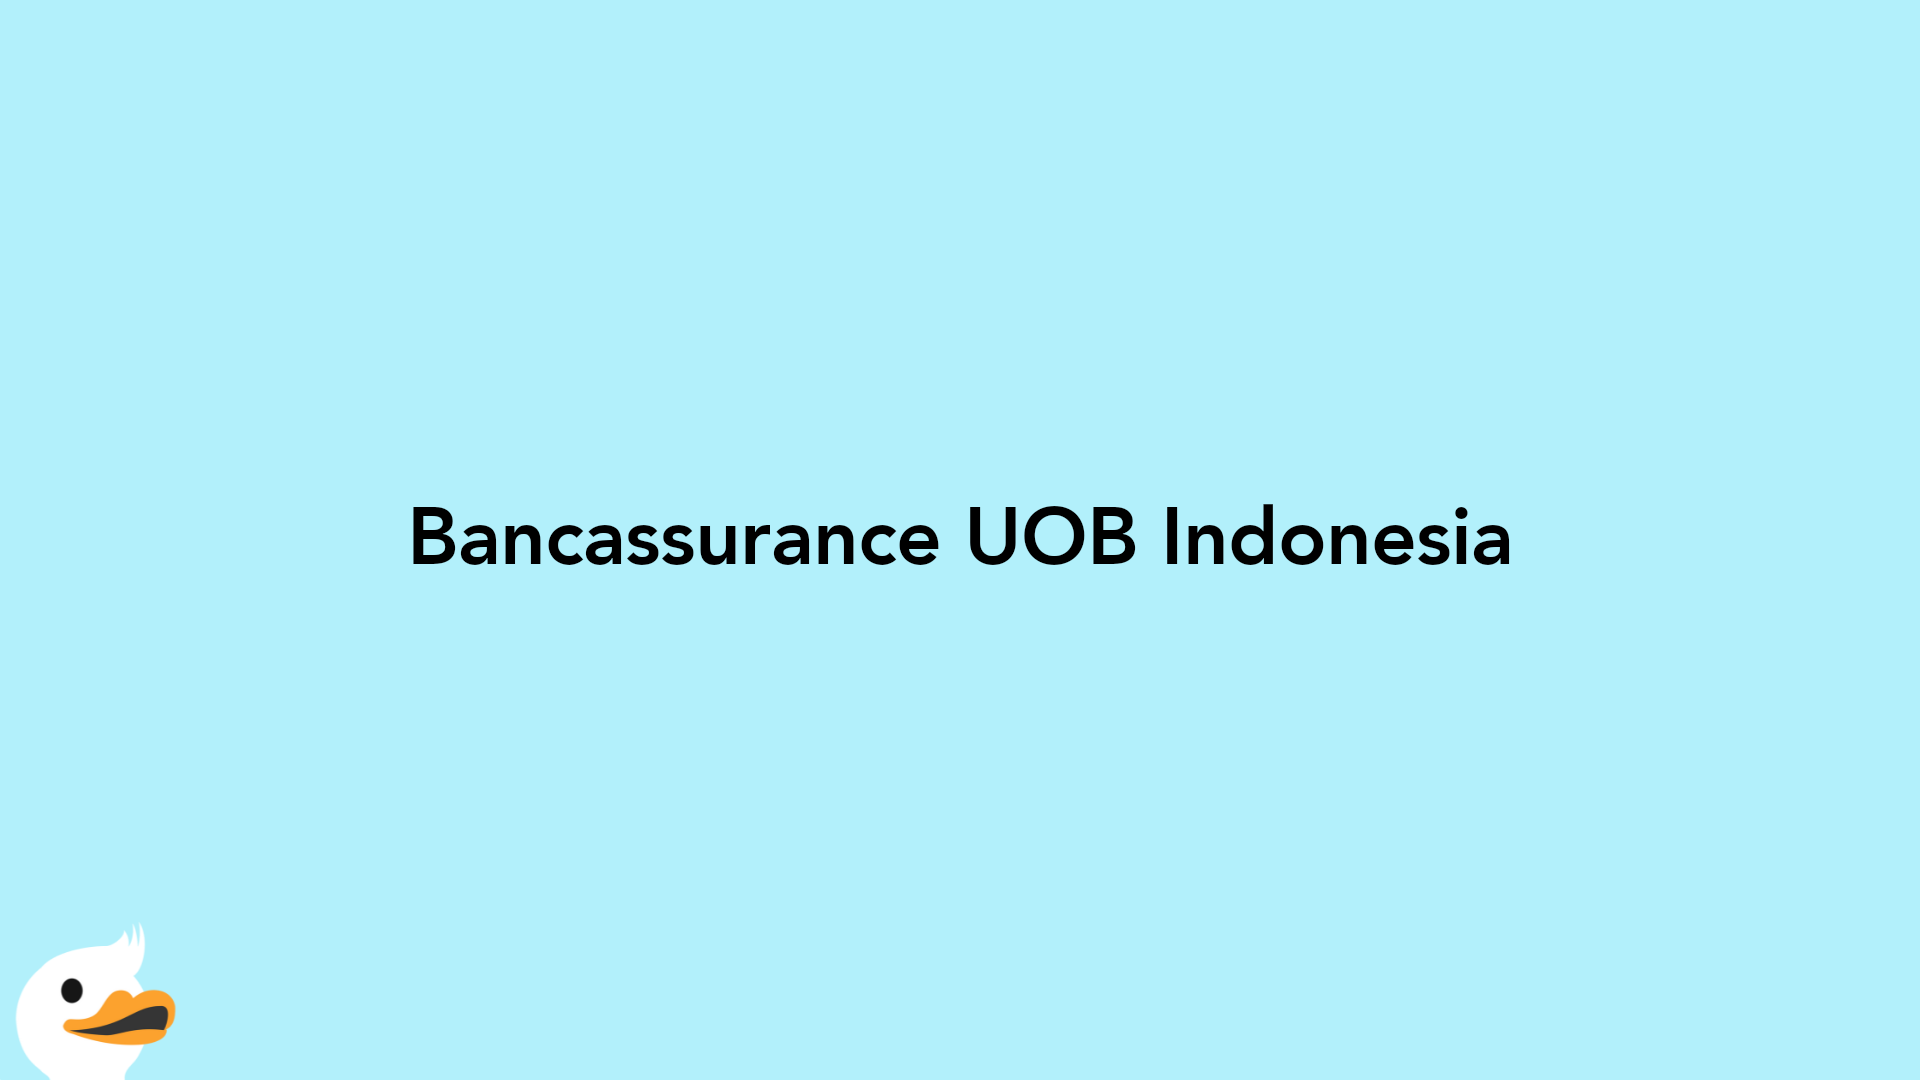 Bancassurance UOB Indonesia